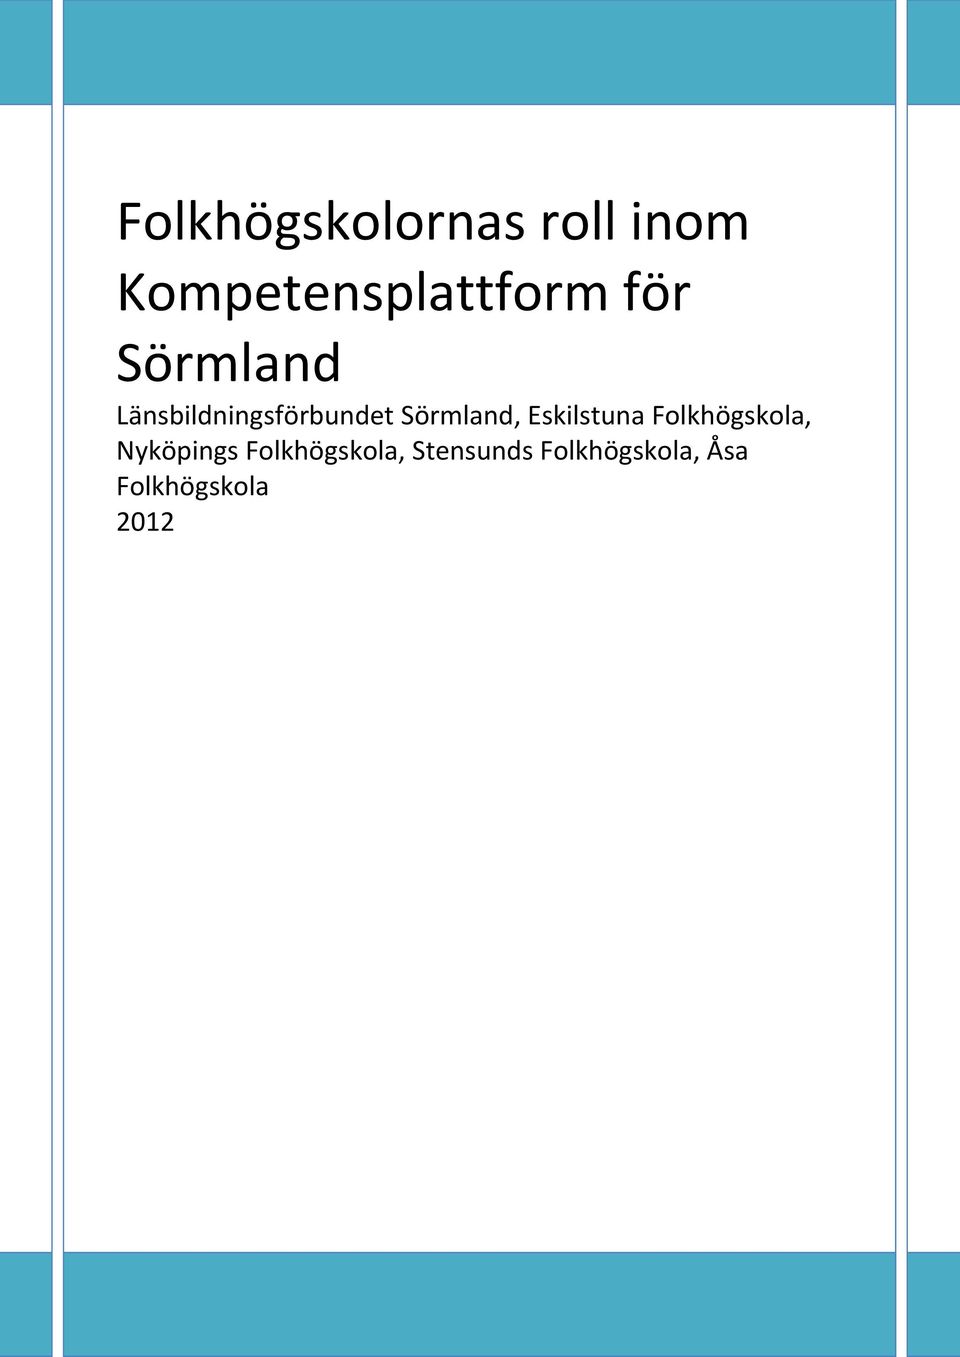 Eskilstuna Folkhögskola, Nyköpings